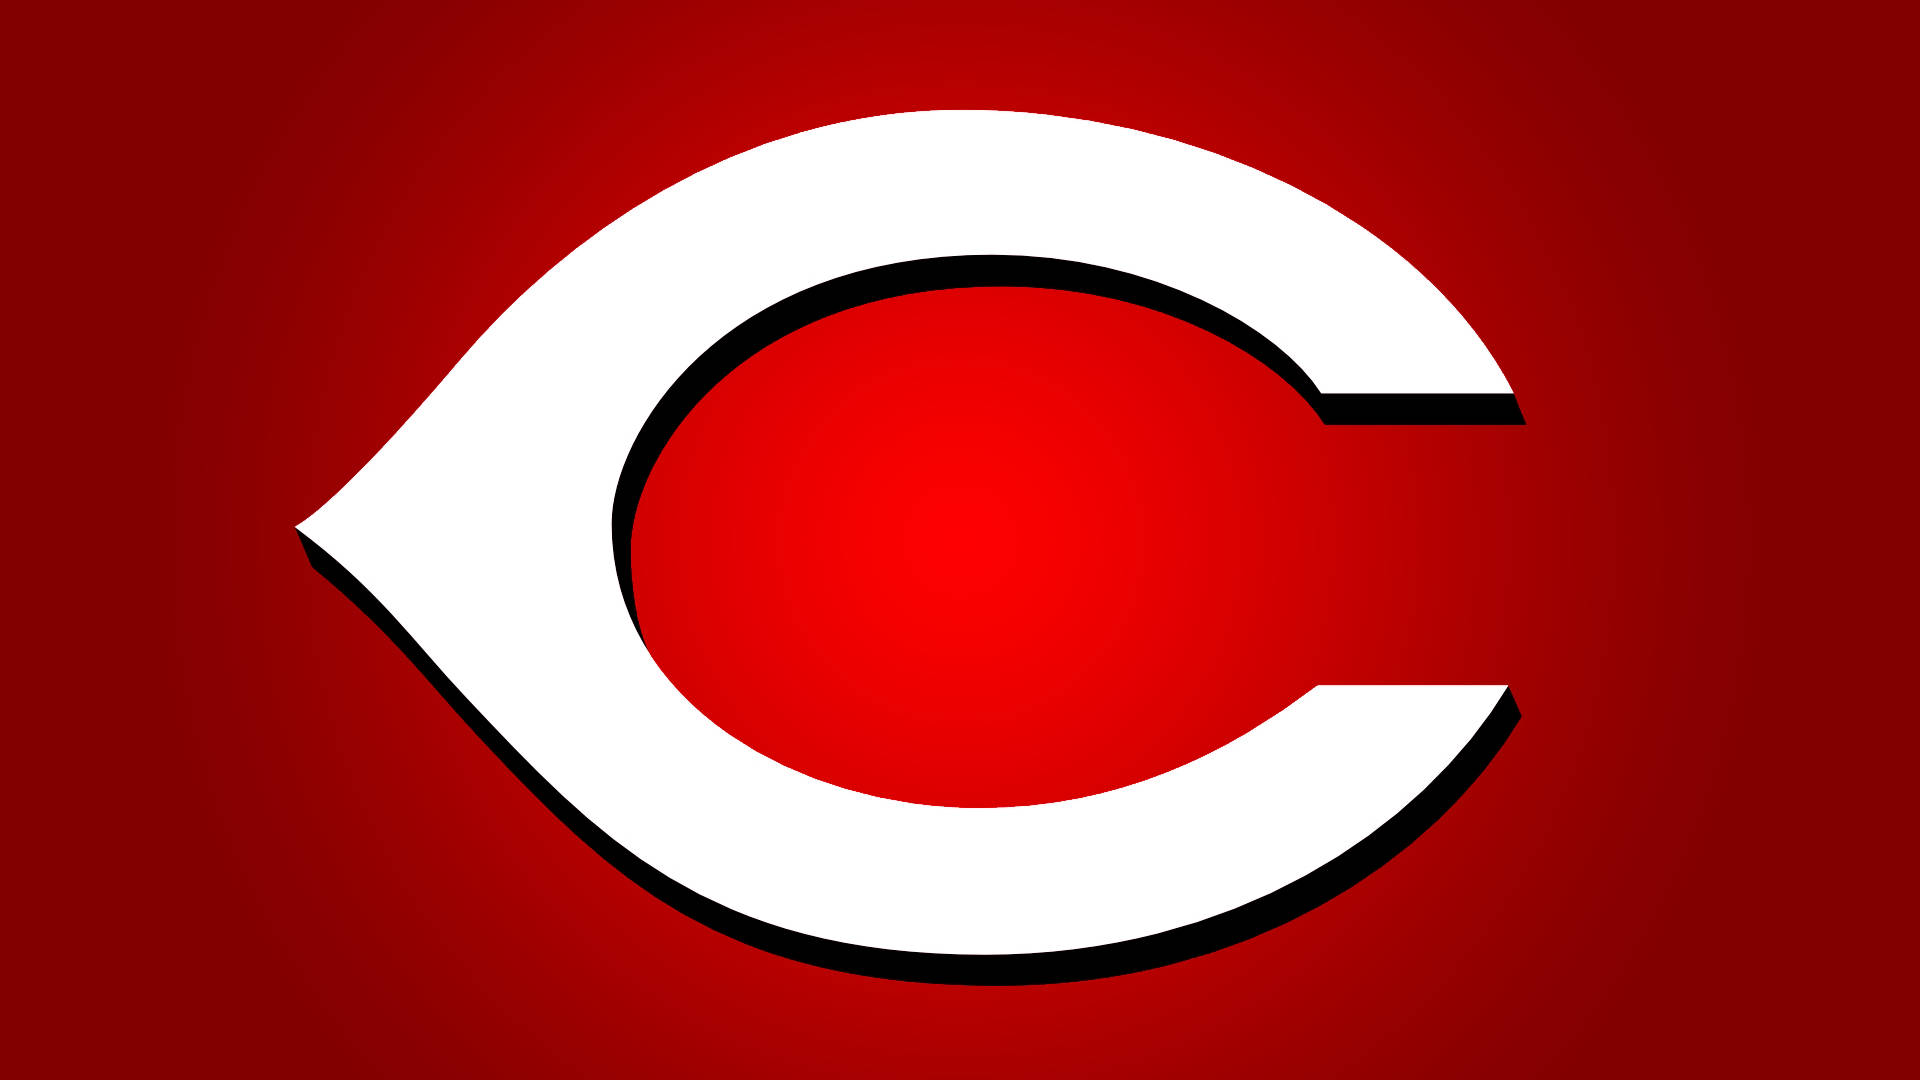 Classic Red Logo For Cincinnati Reds